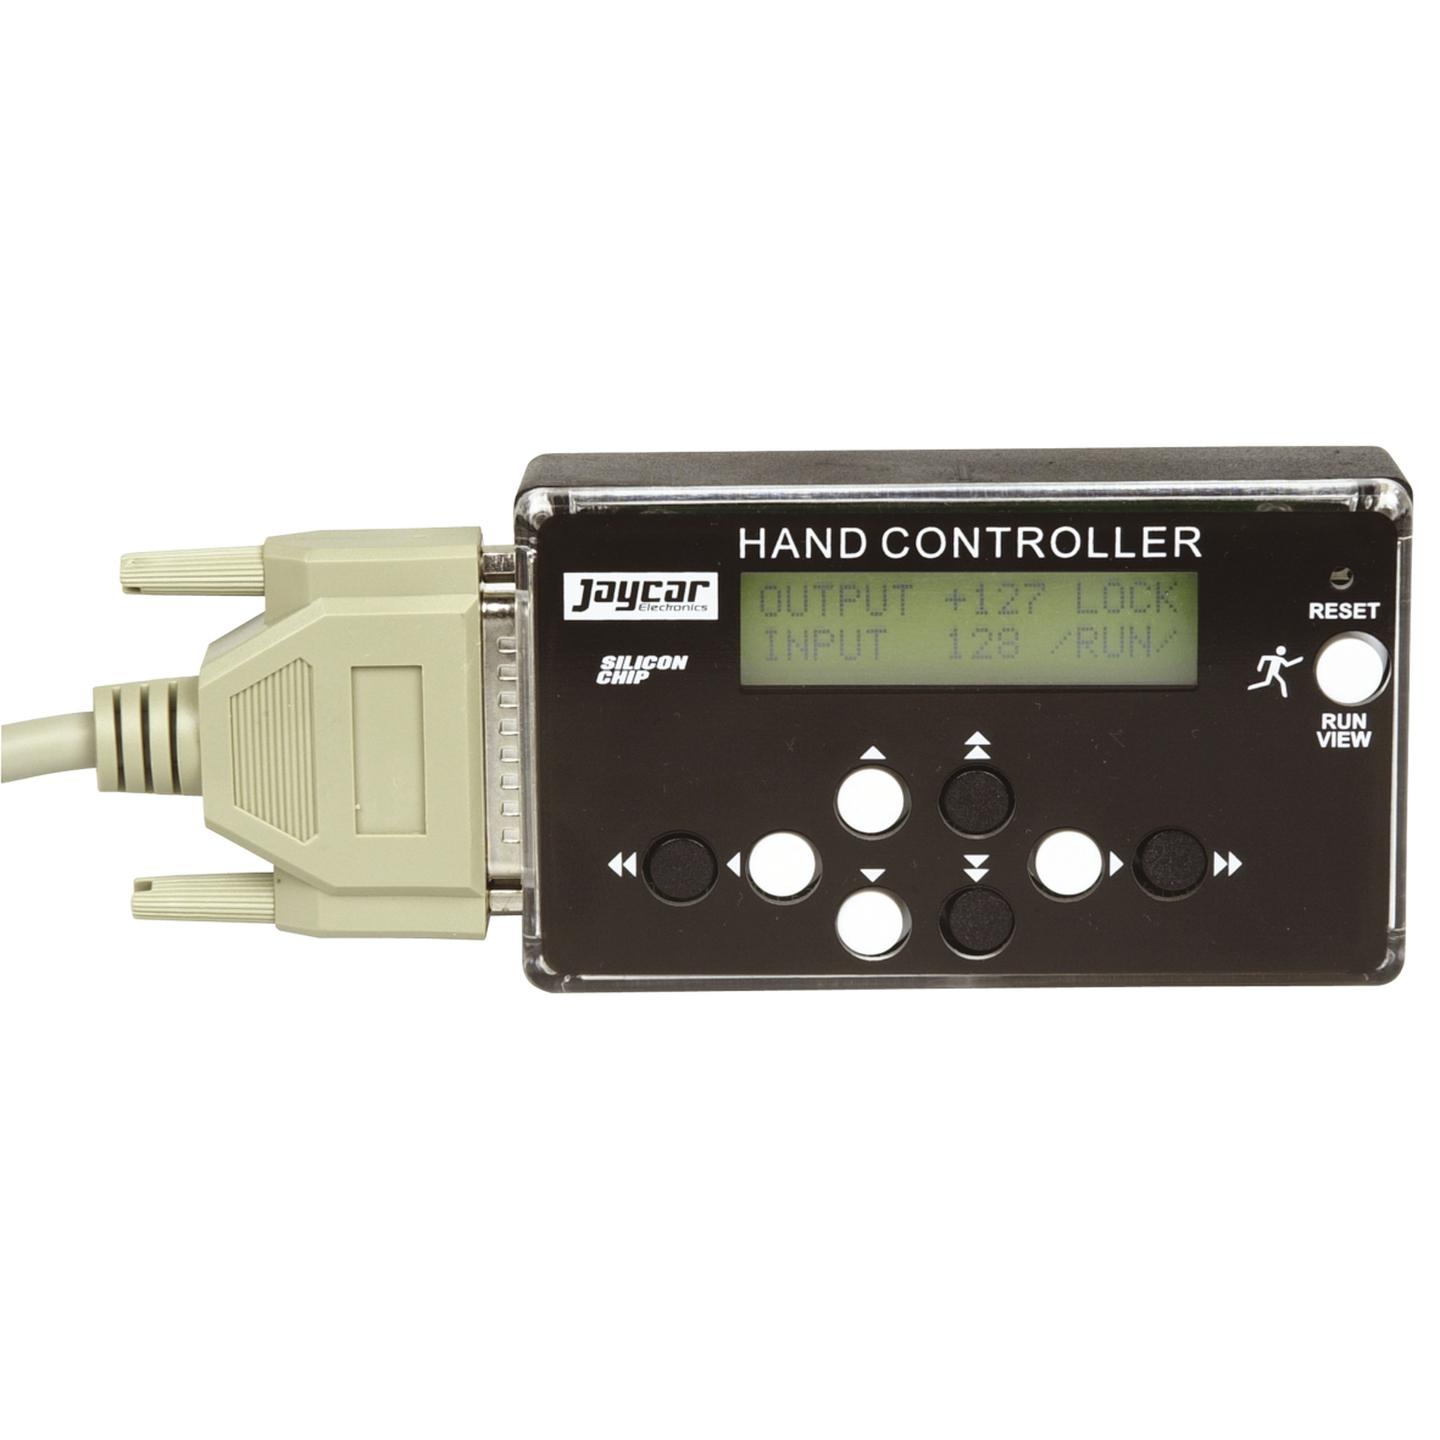 Hand Controller for Digital Adjusters